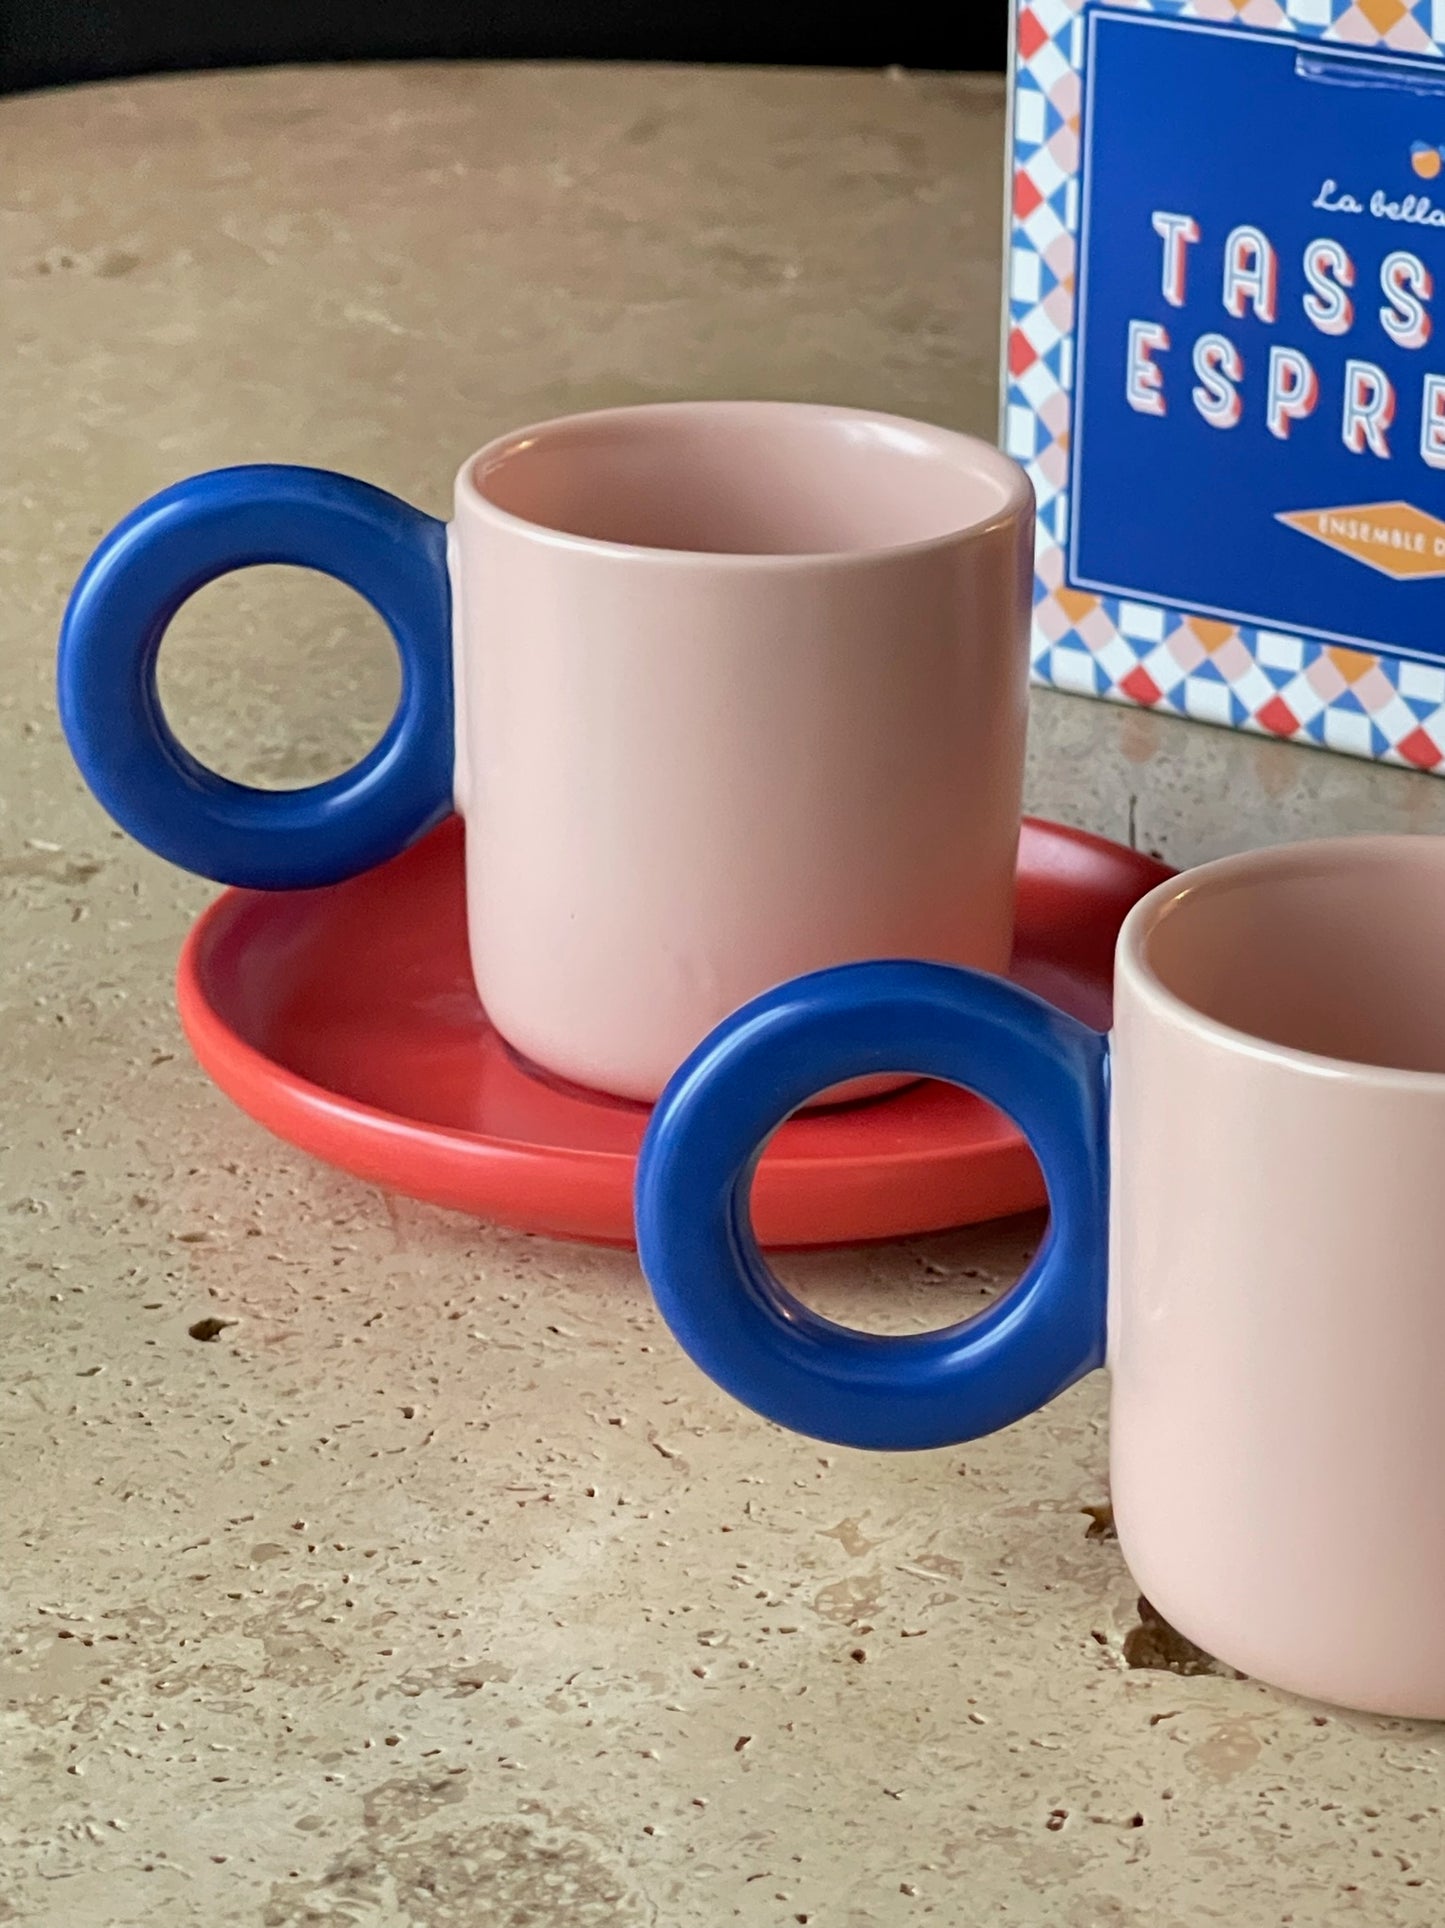 Artisanal kitchenware: OUI Series espresso-sized ceramic mug